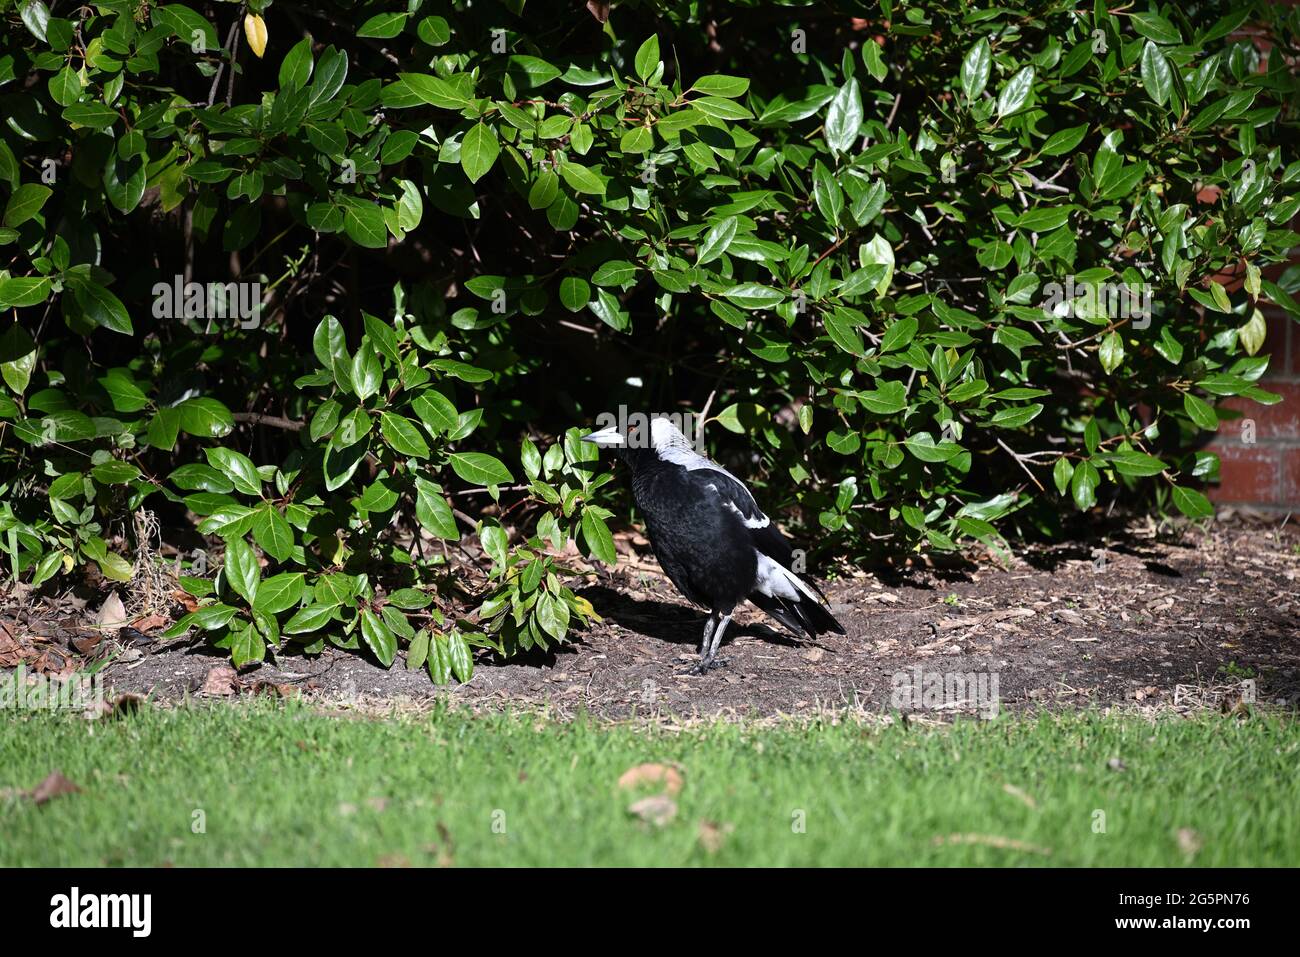 An Australian magpie standing alone beside a bright green bush, the bird's eye shining in the sunlight Stock Photo